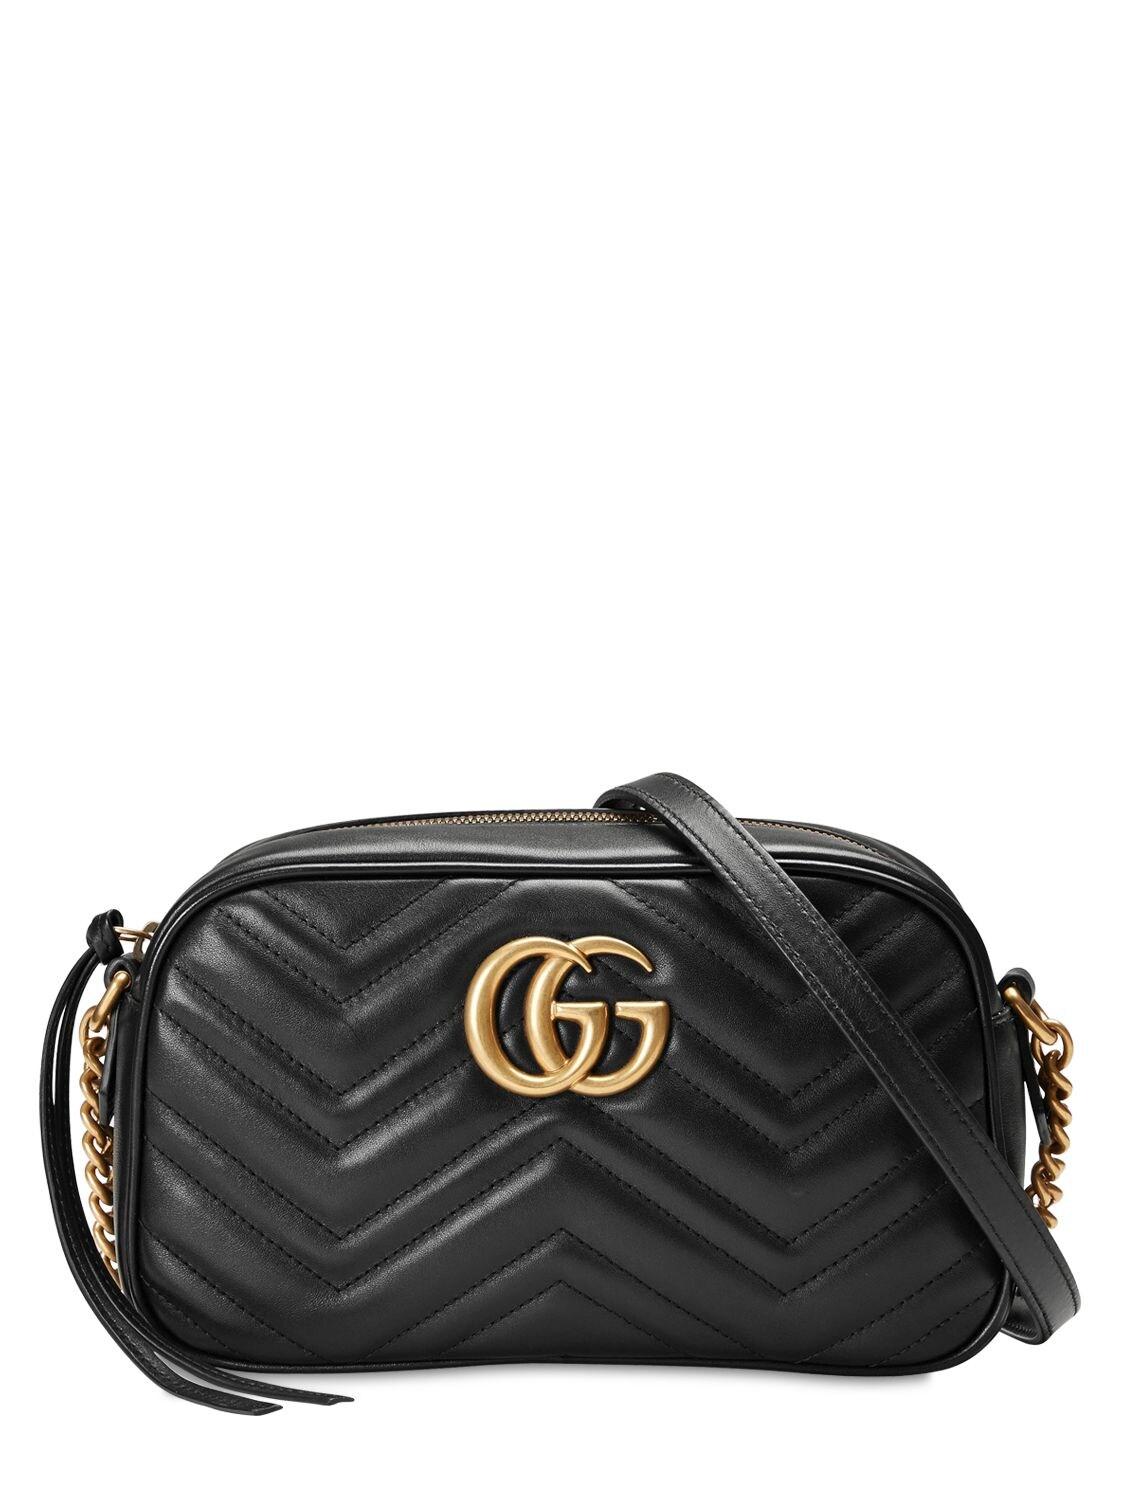 Gucci Marmont Camera Bag Small Hotsell, SAVE 53%.